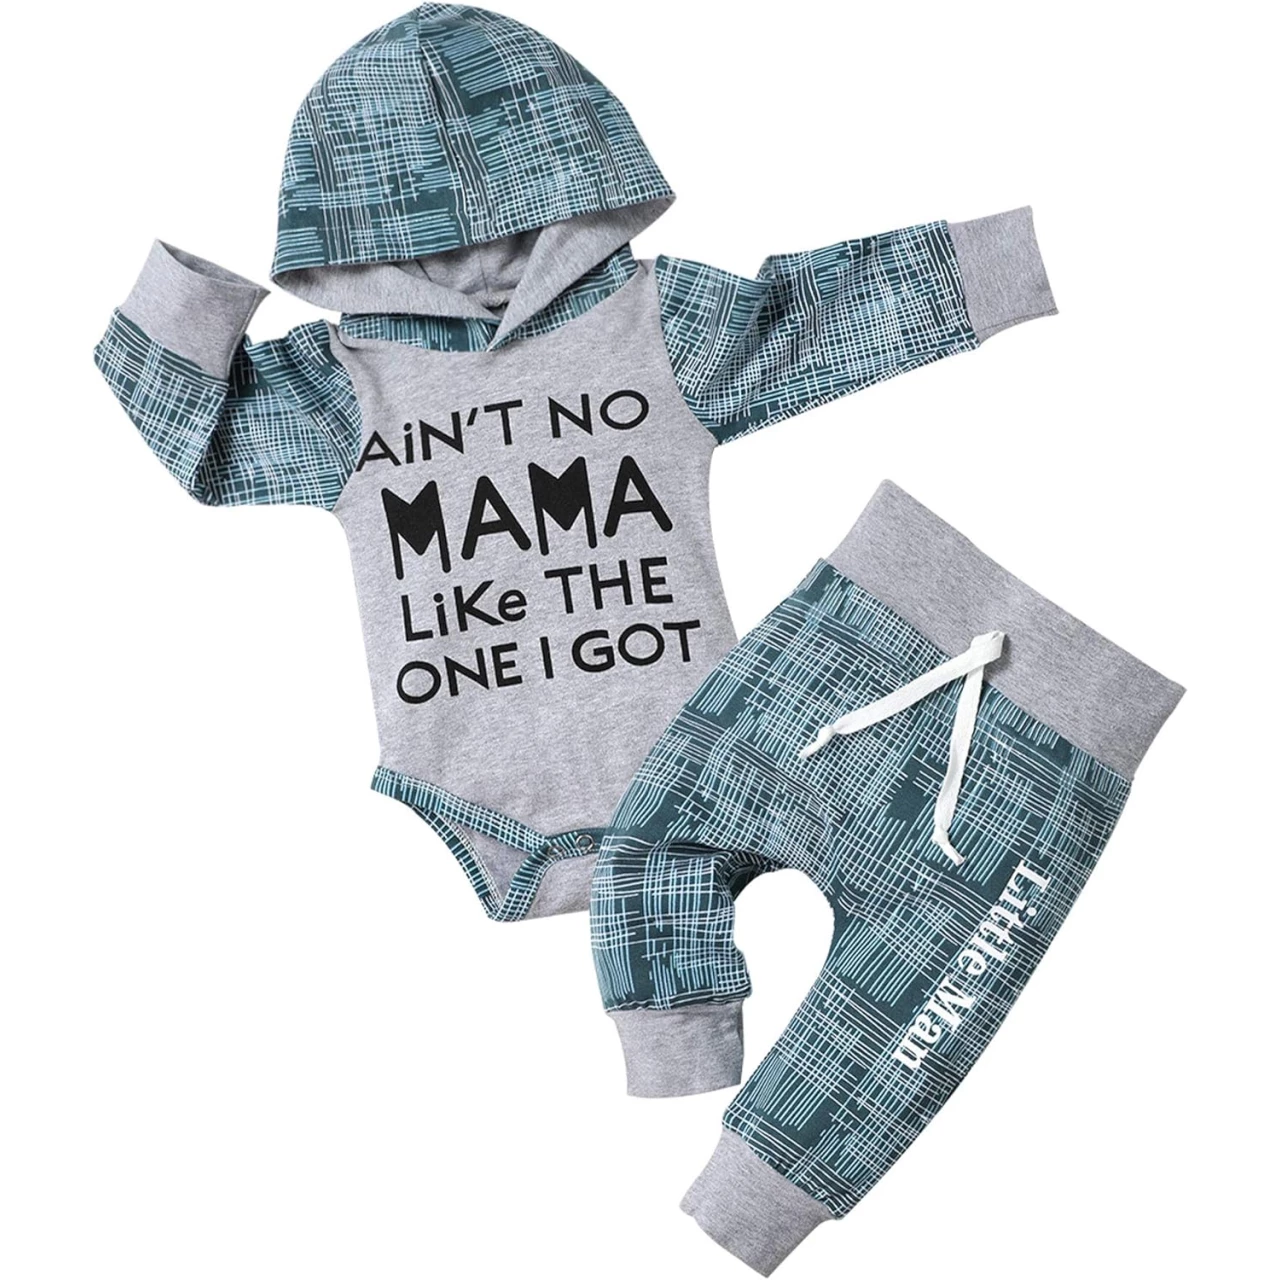 Von kilizo Baby Boy Clothes Long Sleeve Dinosaur Hoodies Sweater Pant Sets